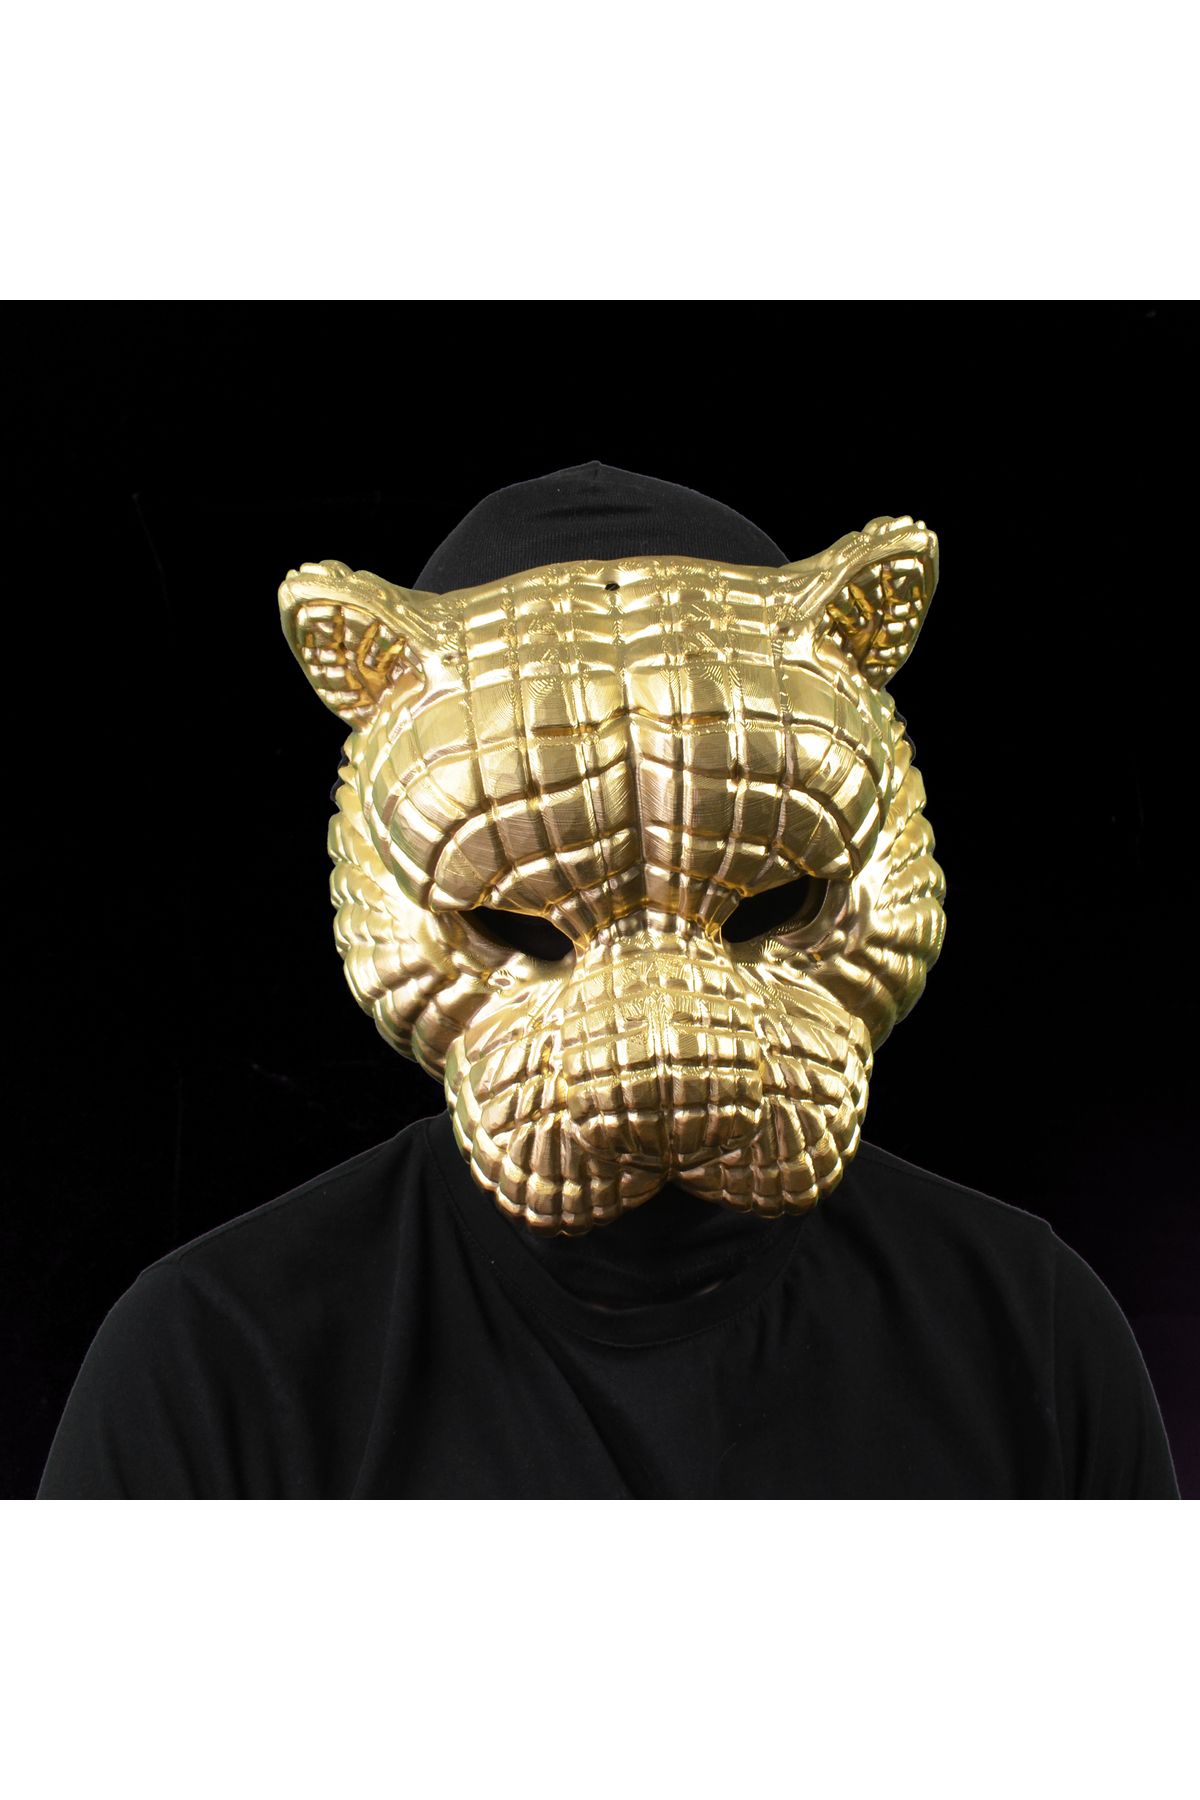 Fume Design Squid Game Vip Kostüm Yüz Maskesi Kostüm Ayarlanabilir Yüz Maskesi